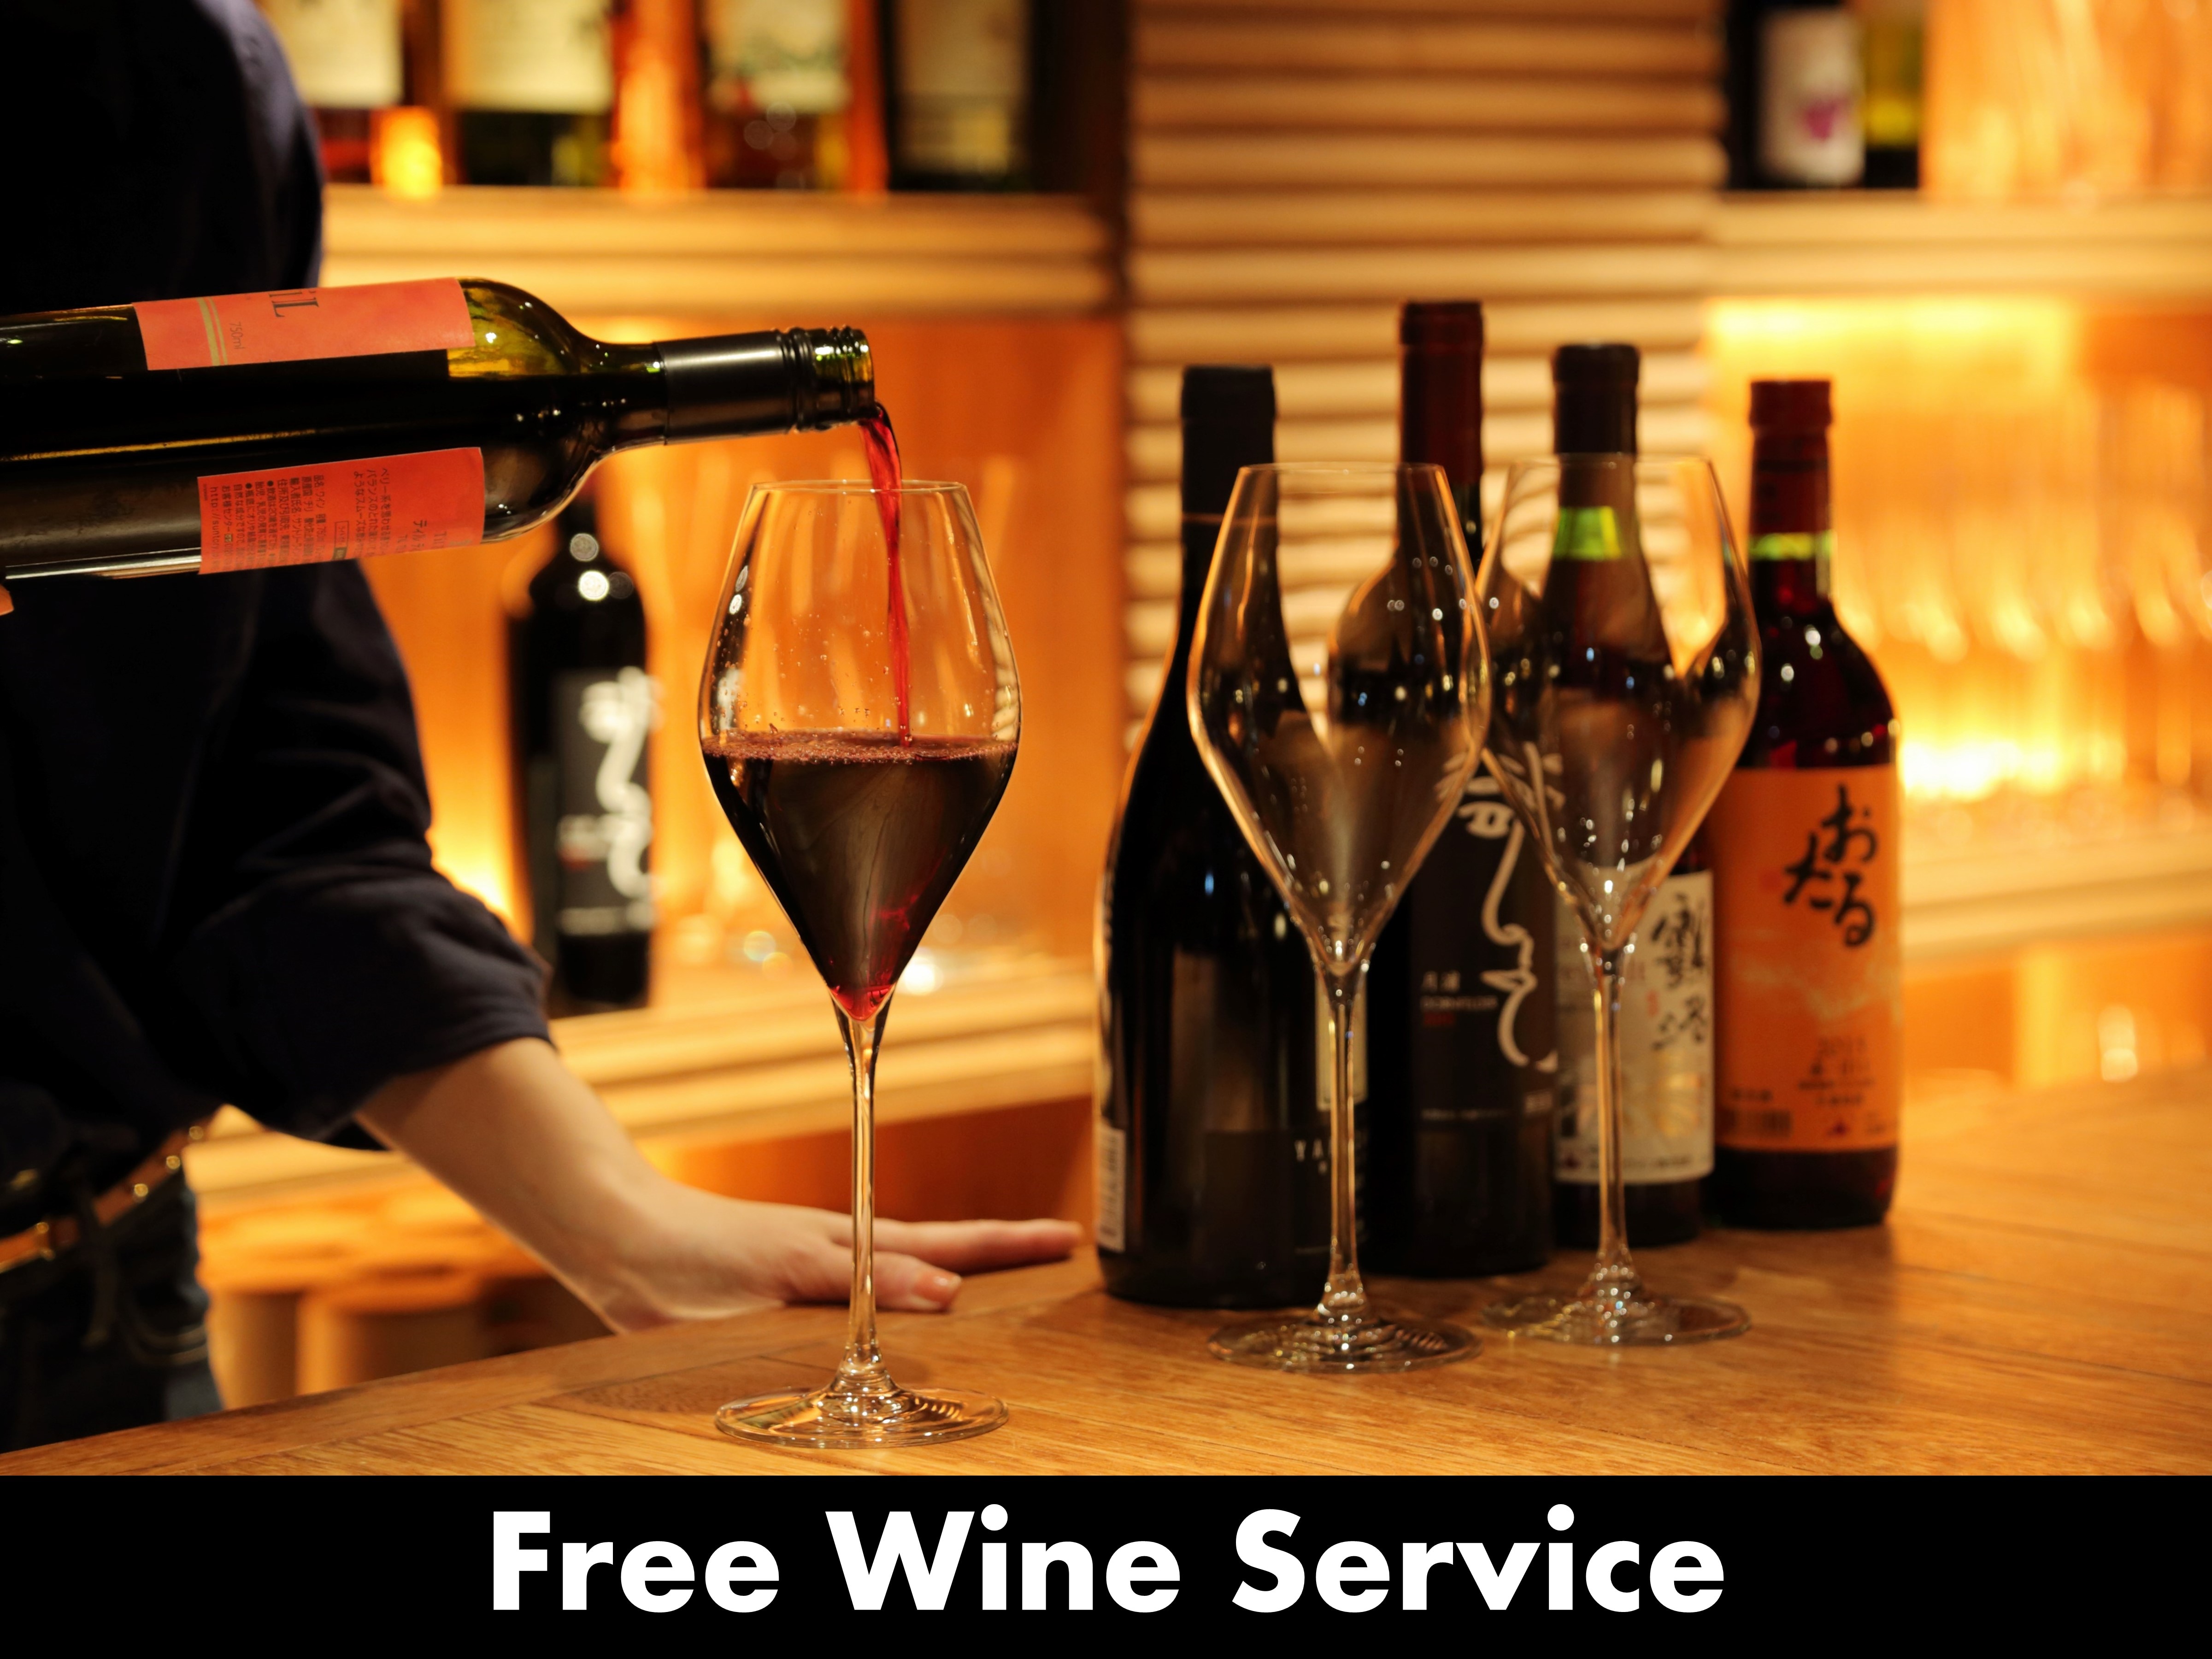 Free wine service